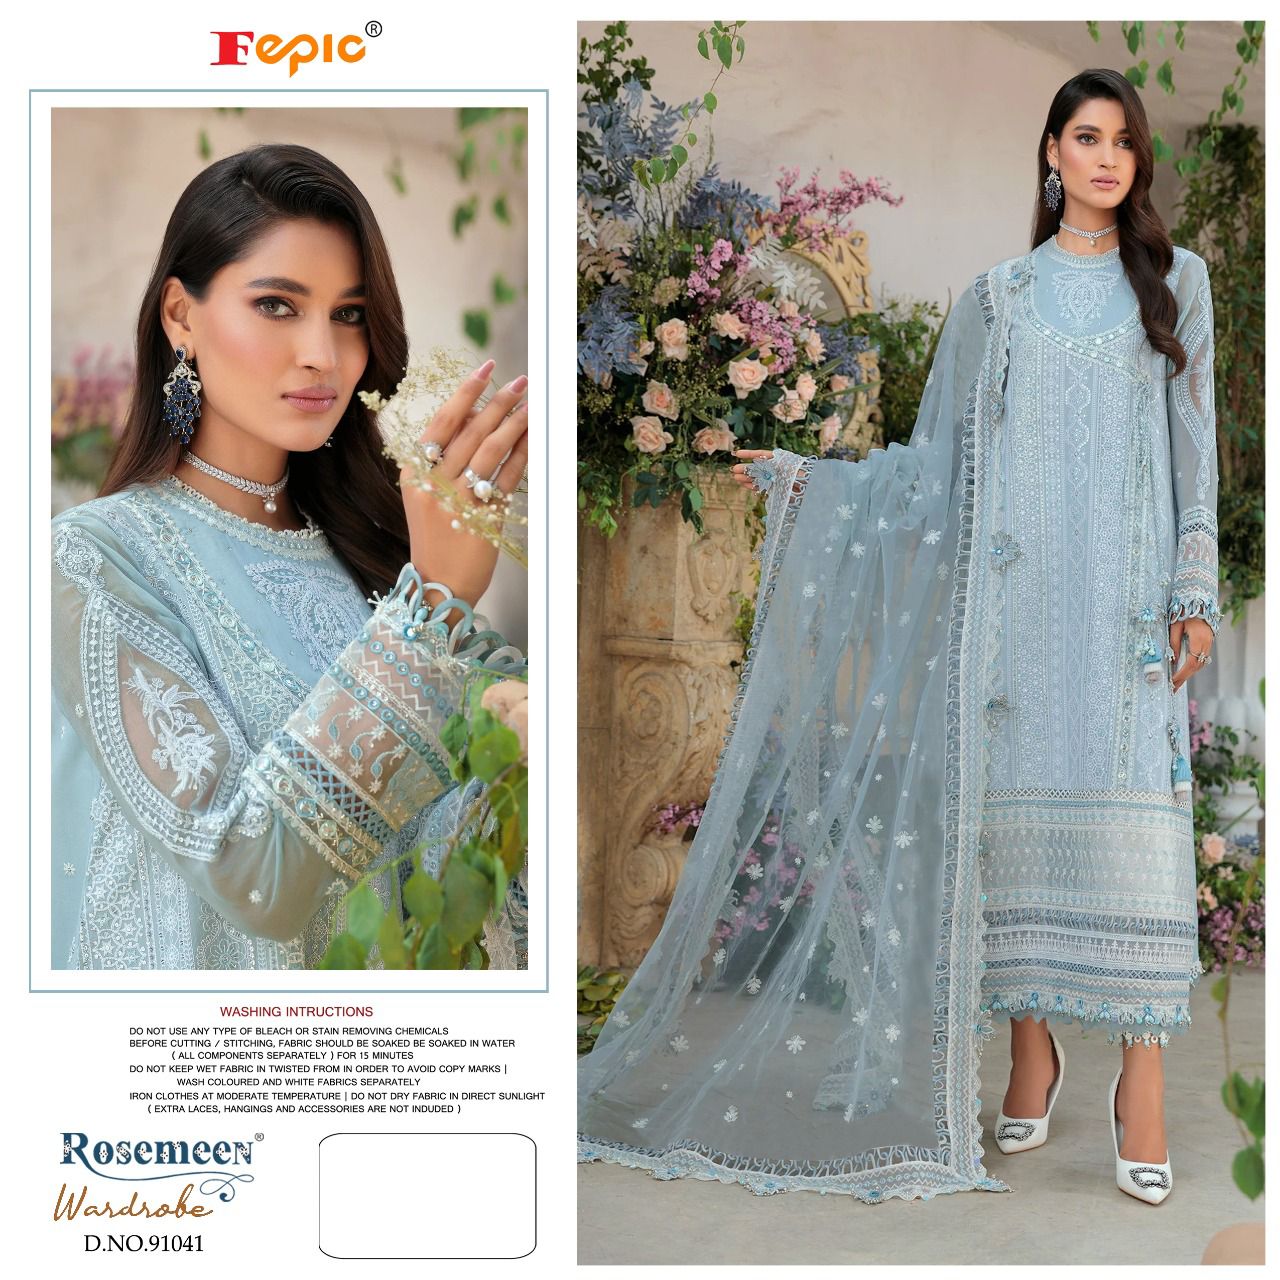 Fepic Rosemeen Wardrobe Pakistani Suits Catalog Lowest Price